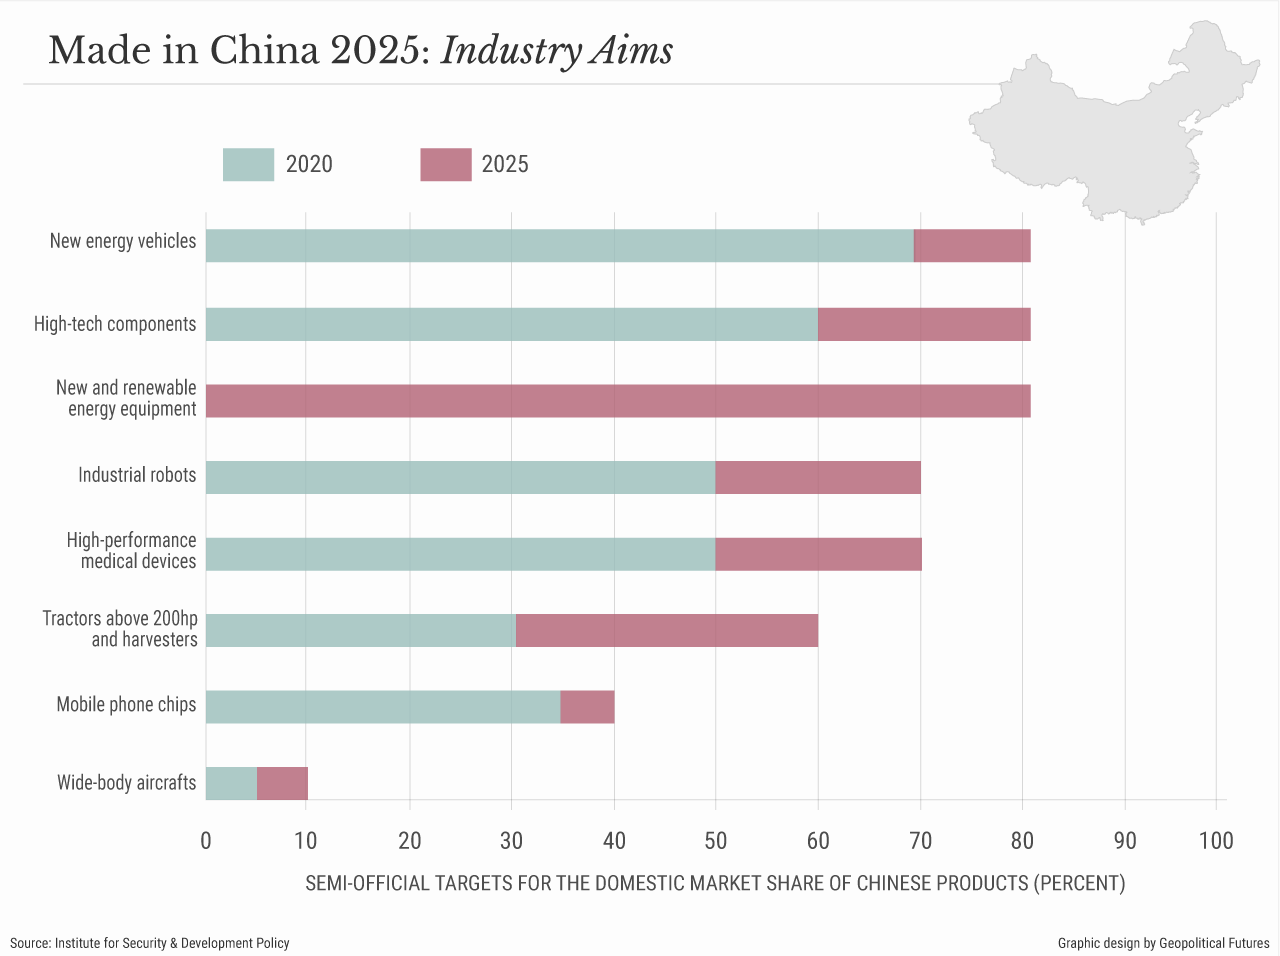 Made in China 2015: Obiettivi Industry